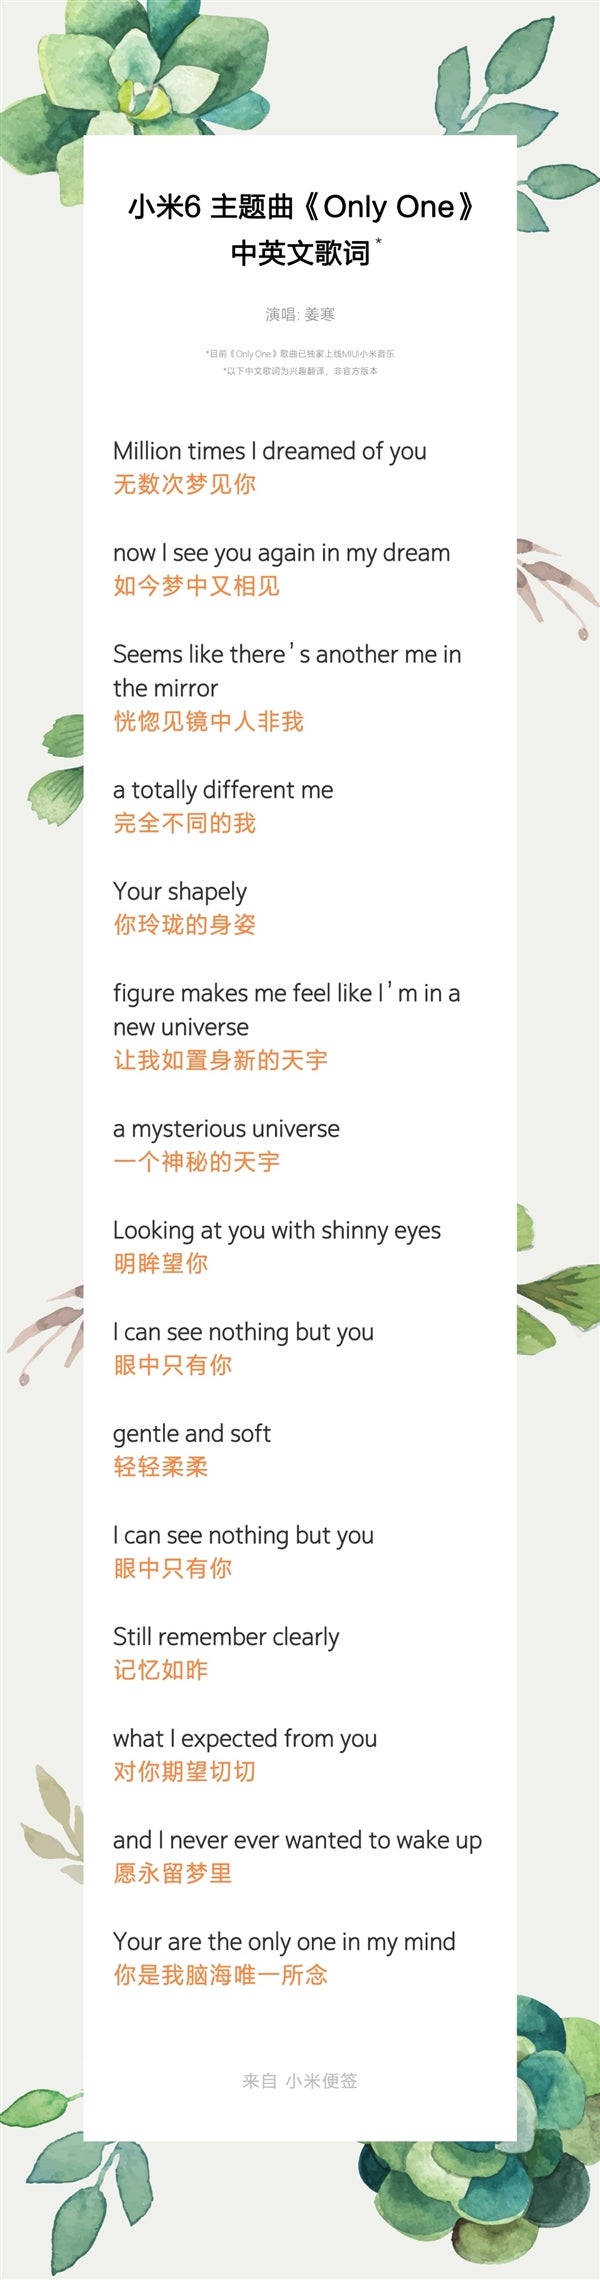 Xiaomi Mi 6's theme song lyrics - Xiaomi Mi 6's official theme song can easily win the Eurovision contest